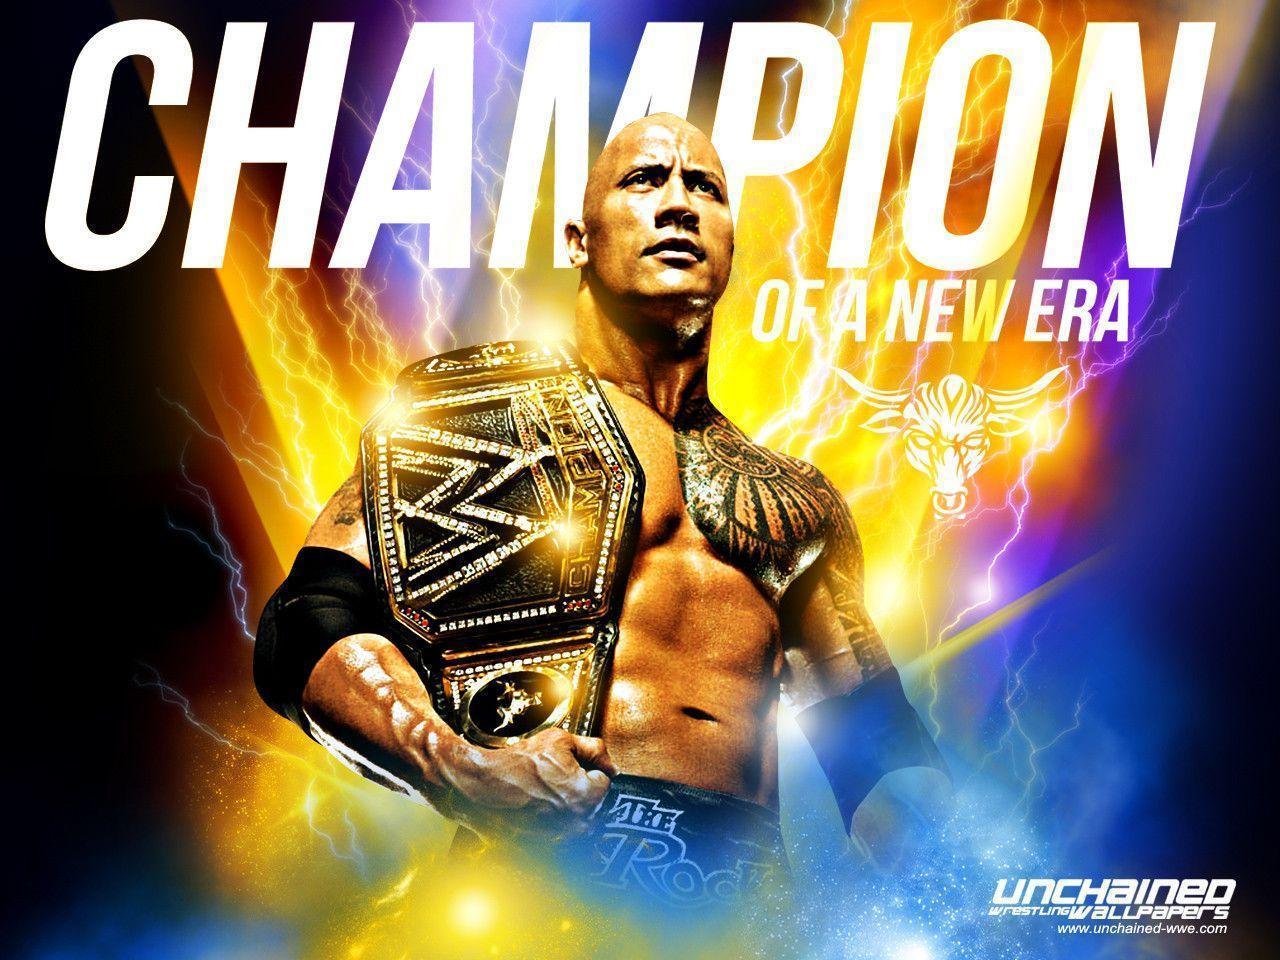 WWE image The Rock of a new Era HD wallpaper